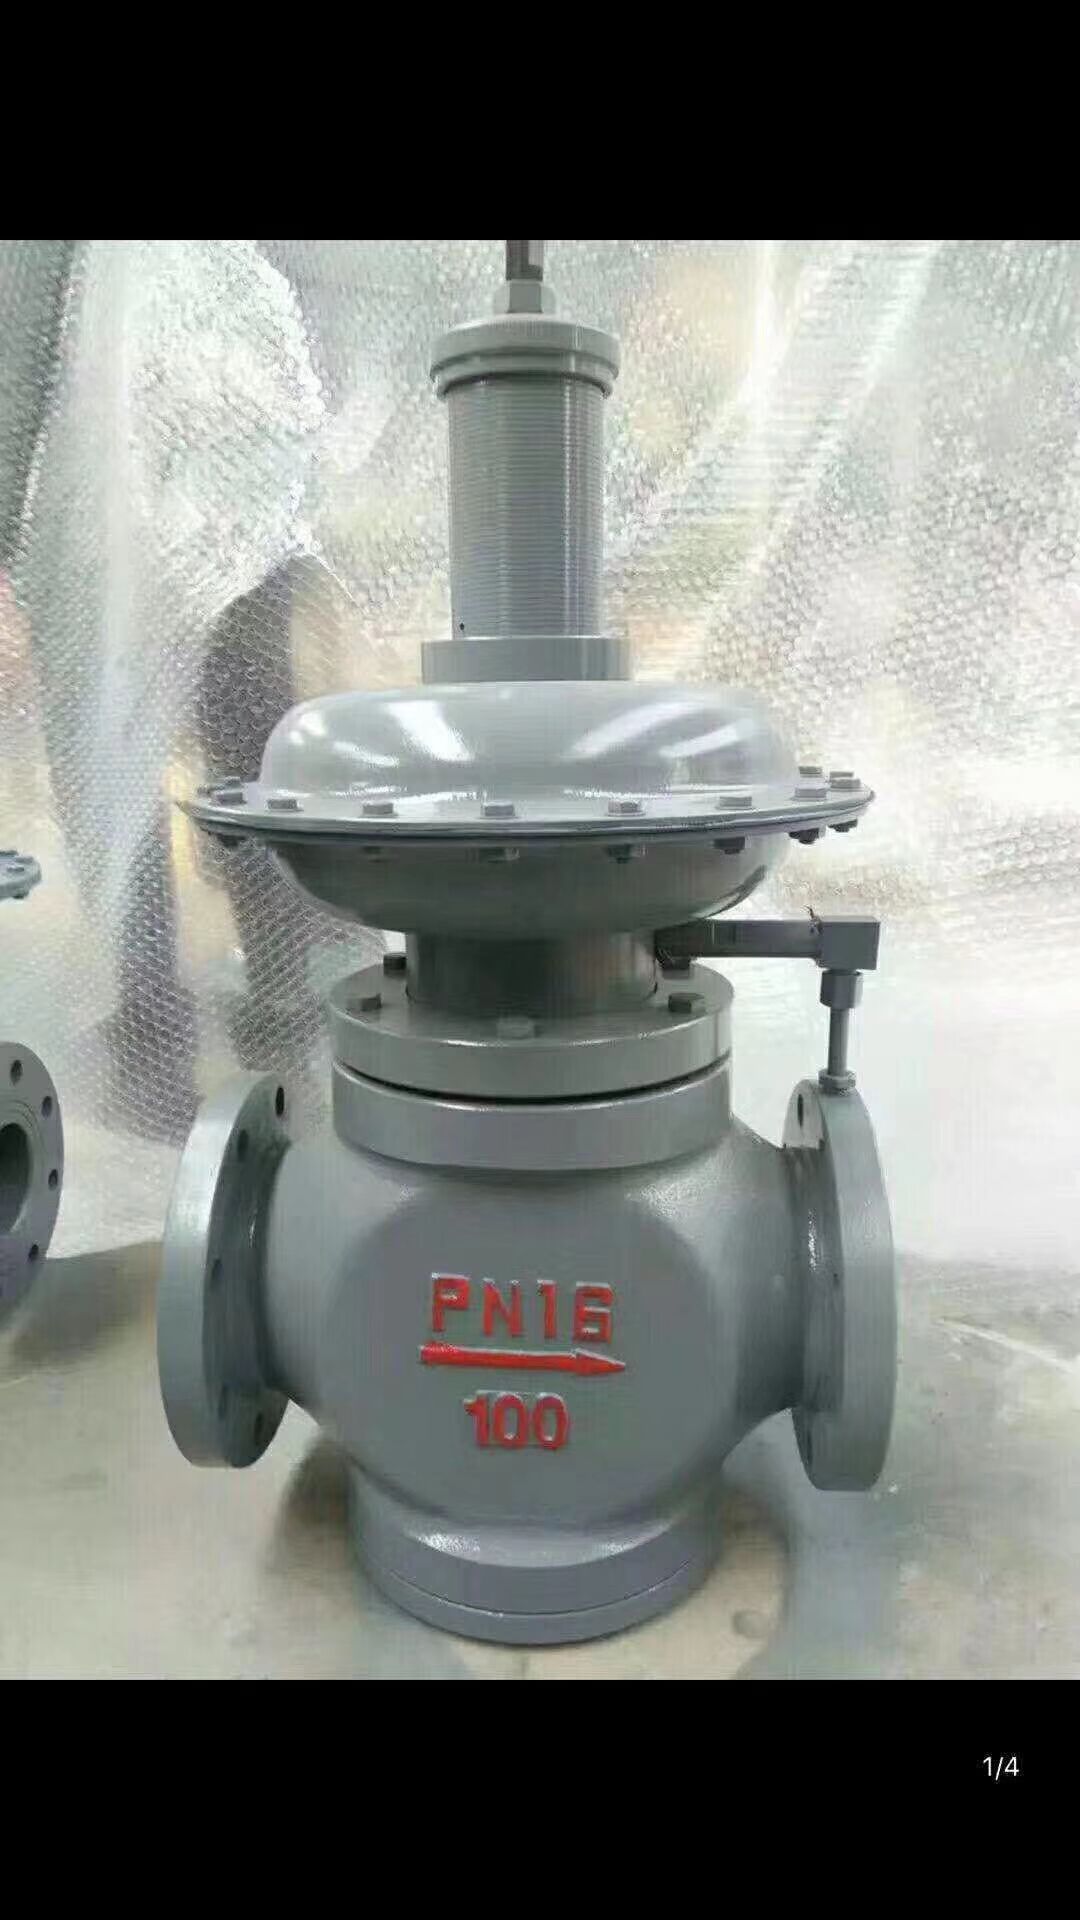 RTZ-K 直接作用式燃气调压器  供应天津燃气调压器 天津燃气设备厂家   天津燃气设备供应